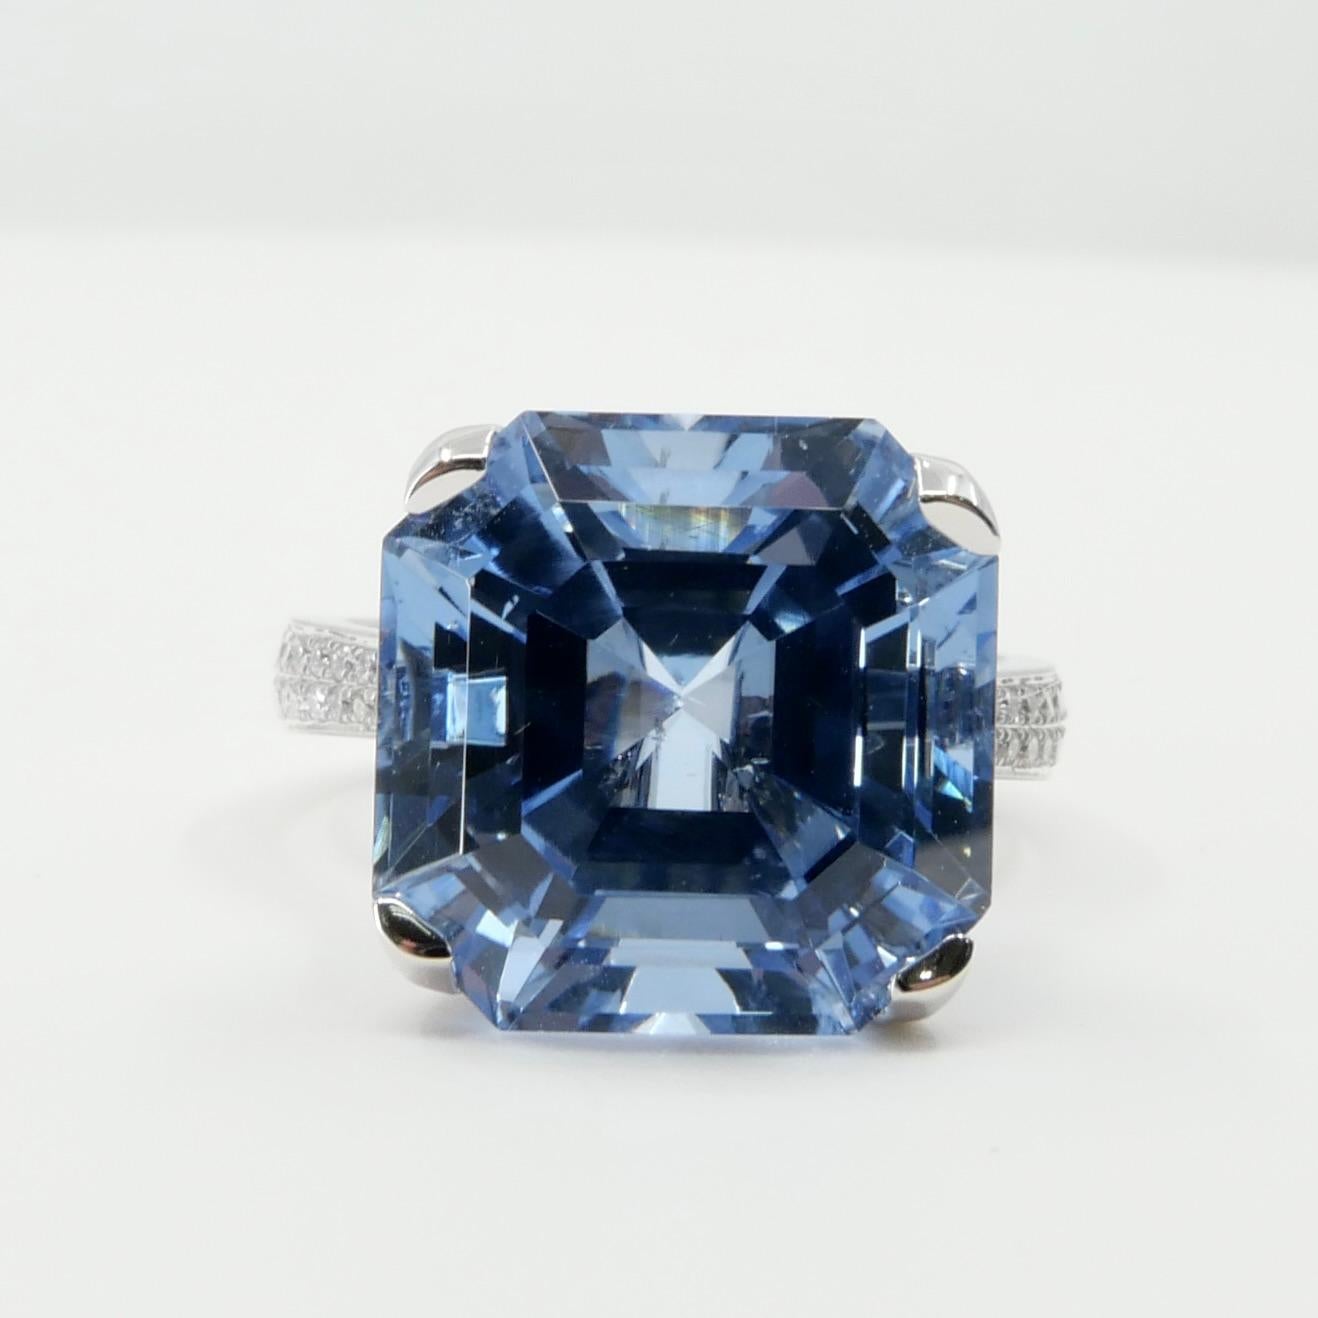 Certified 11.23 Cts Asscher Cut Aquamarine Diamond Ring, True Santa Maria Color 8